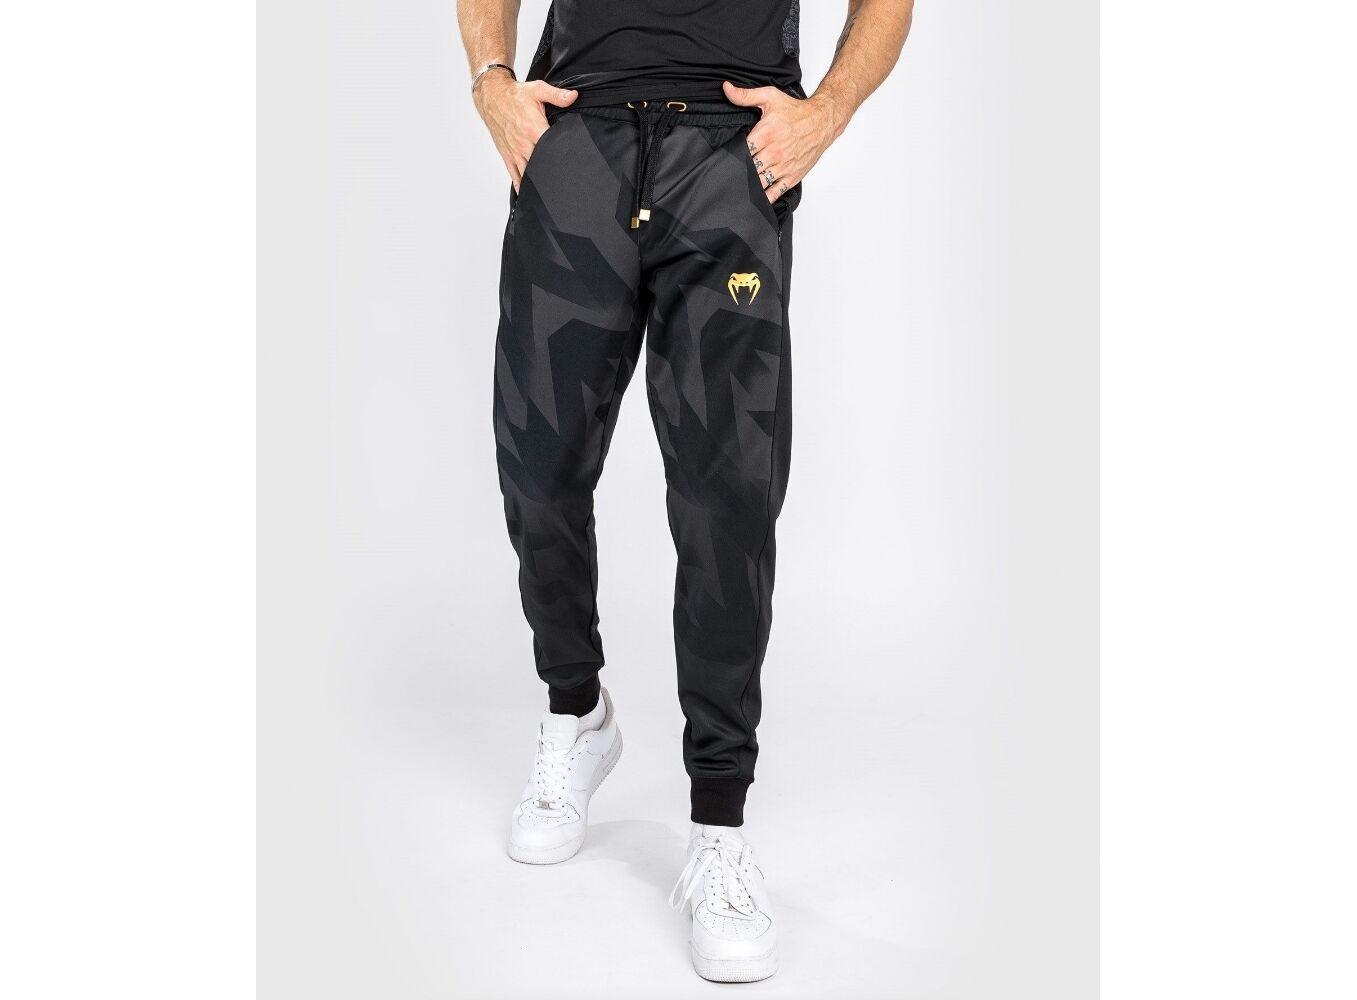  Venum Classic Joggers Black/Black - S : Clothing